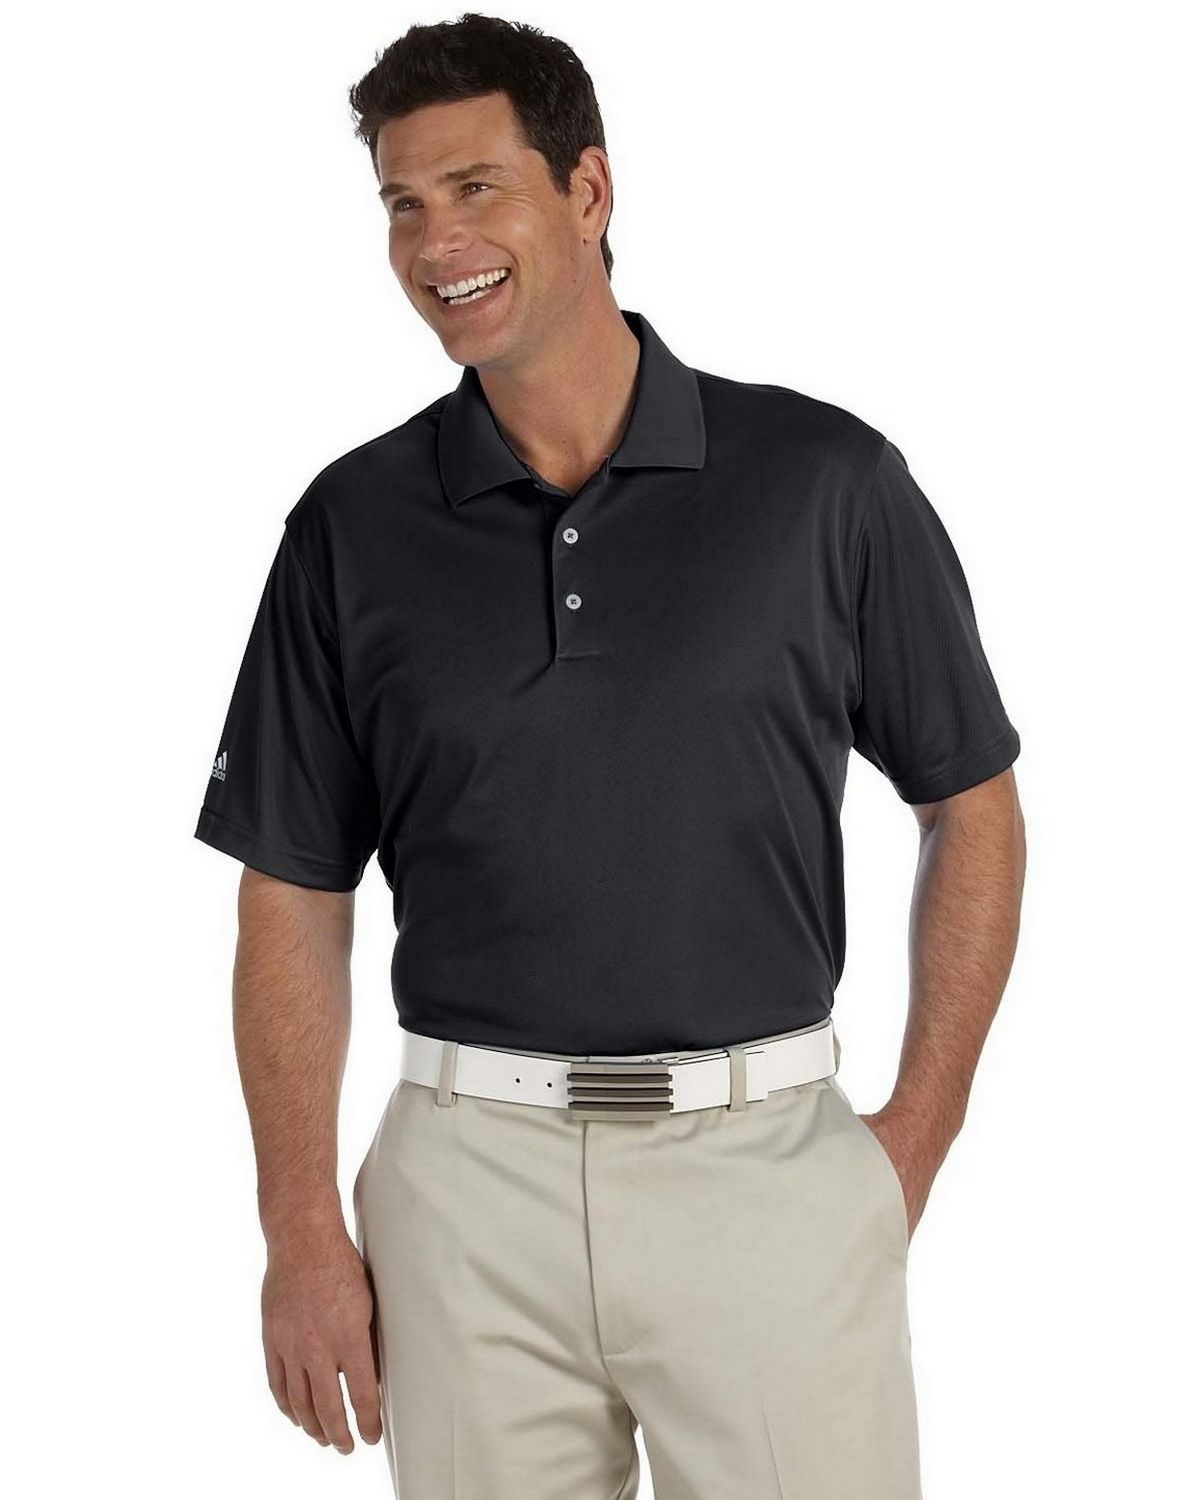 2019 adidas golf shirts